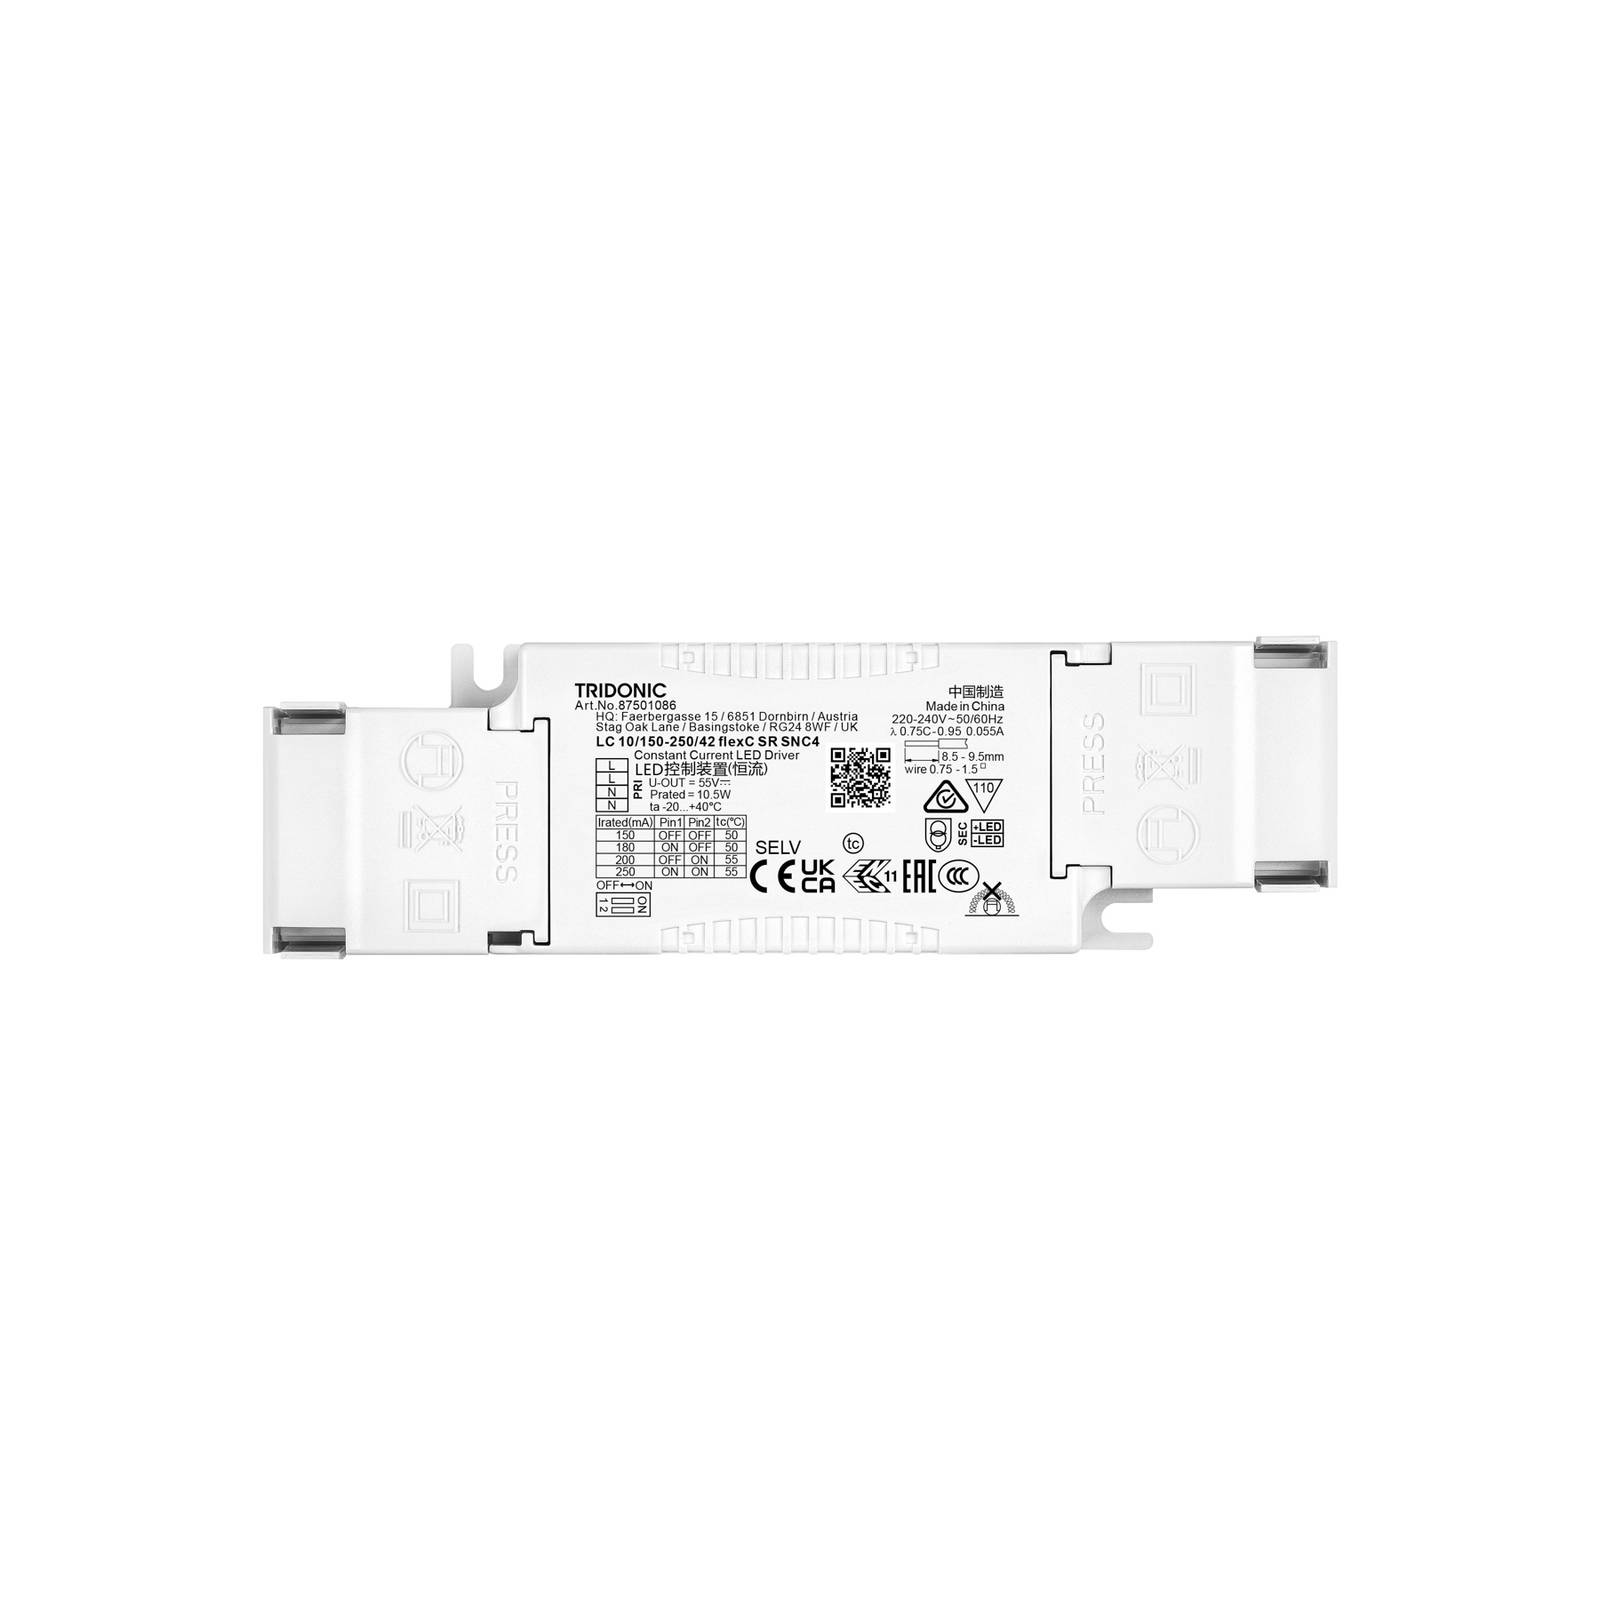 TRIDONIC LED-kompaktdriver LC 10/150-250/42 flexC SR SNC4